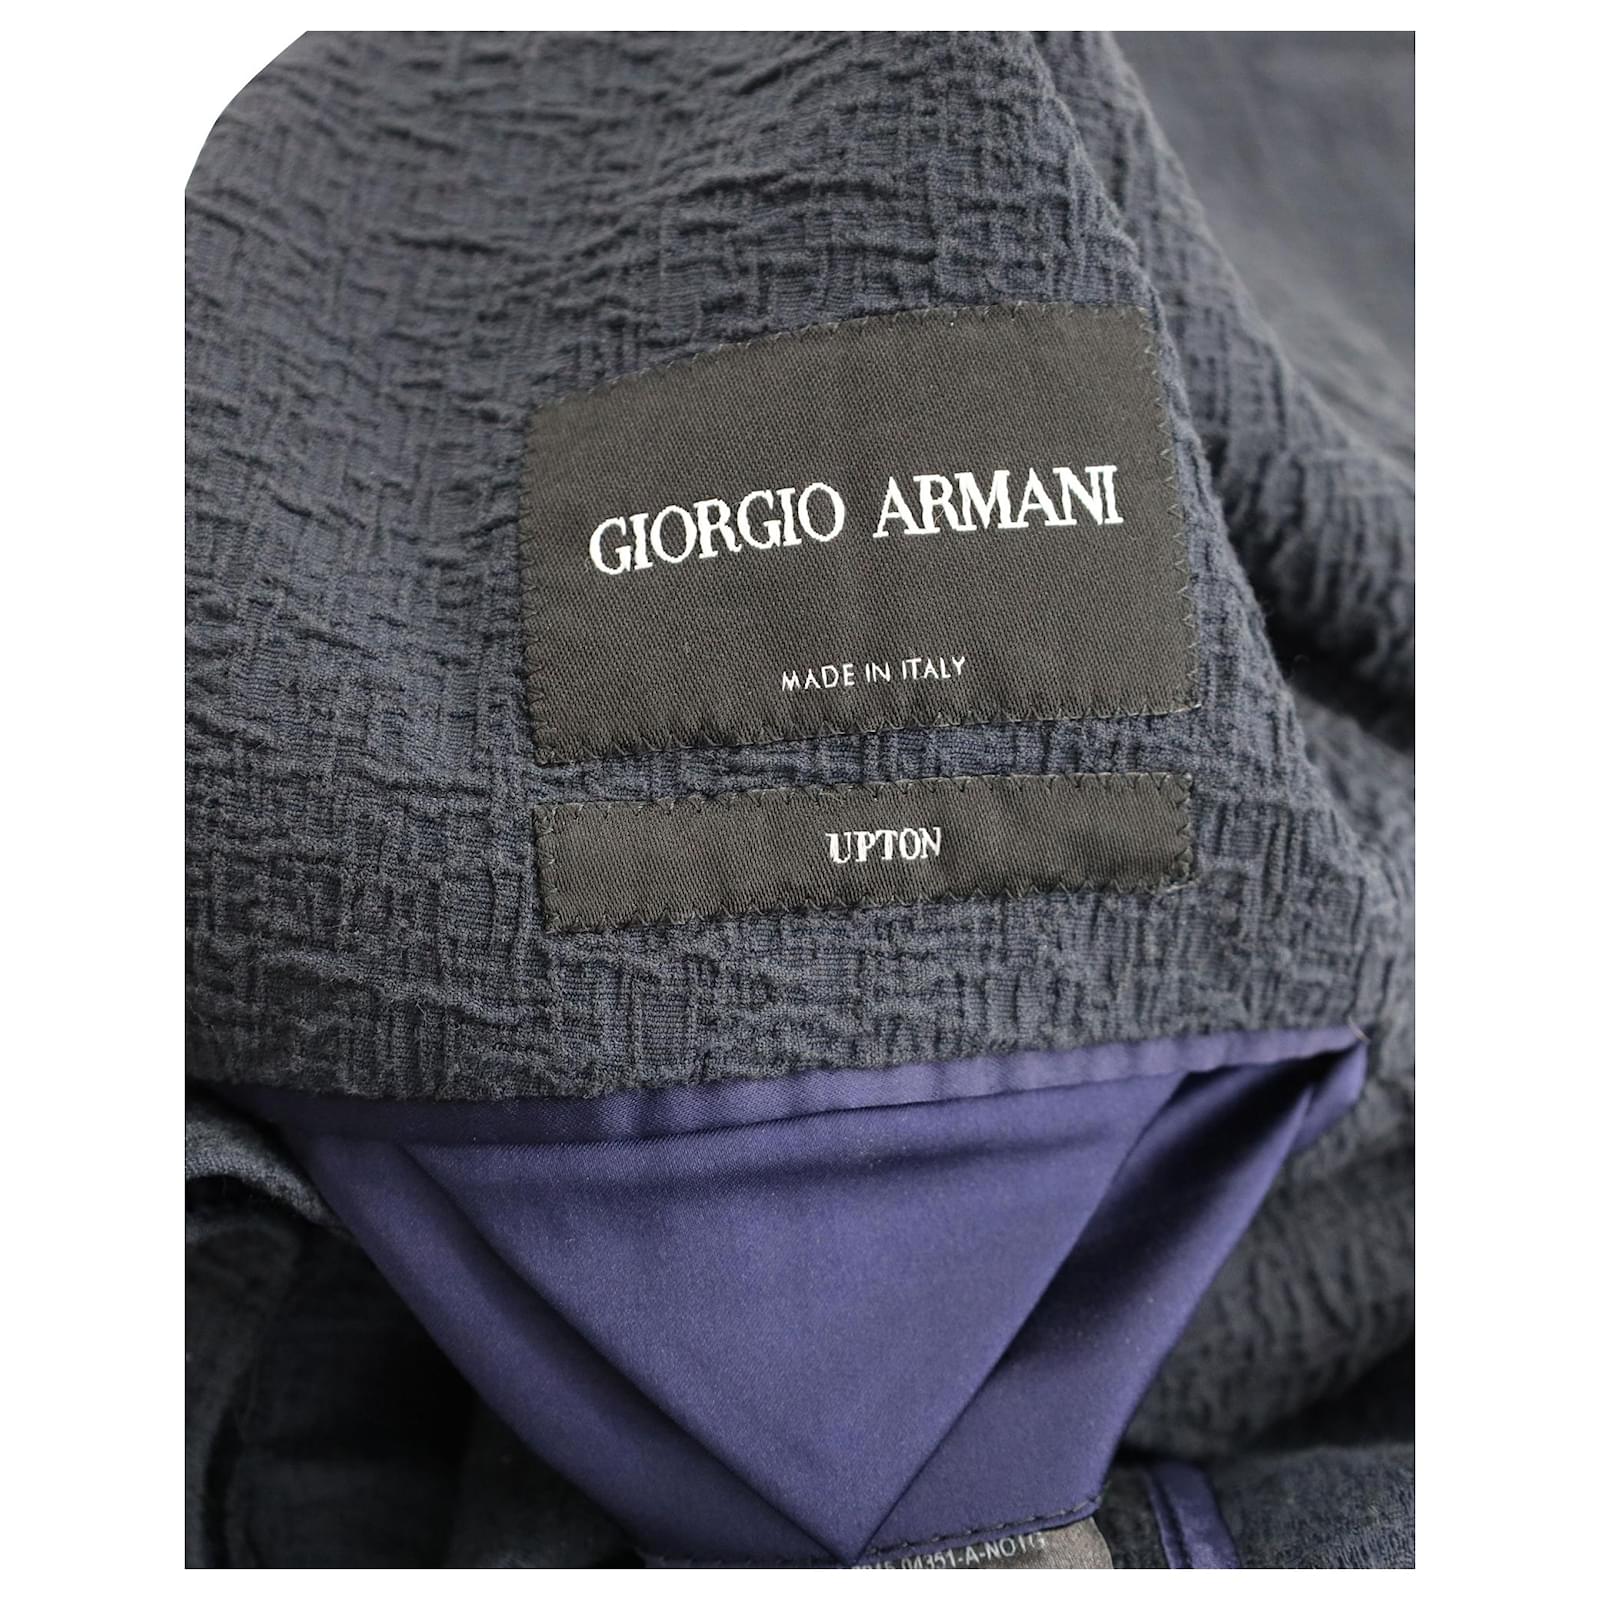 Giorgio Armani Upton Single-Breasted Textured Jacket in Navy Blue ...